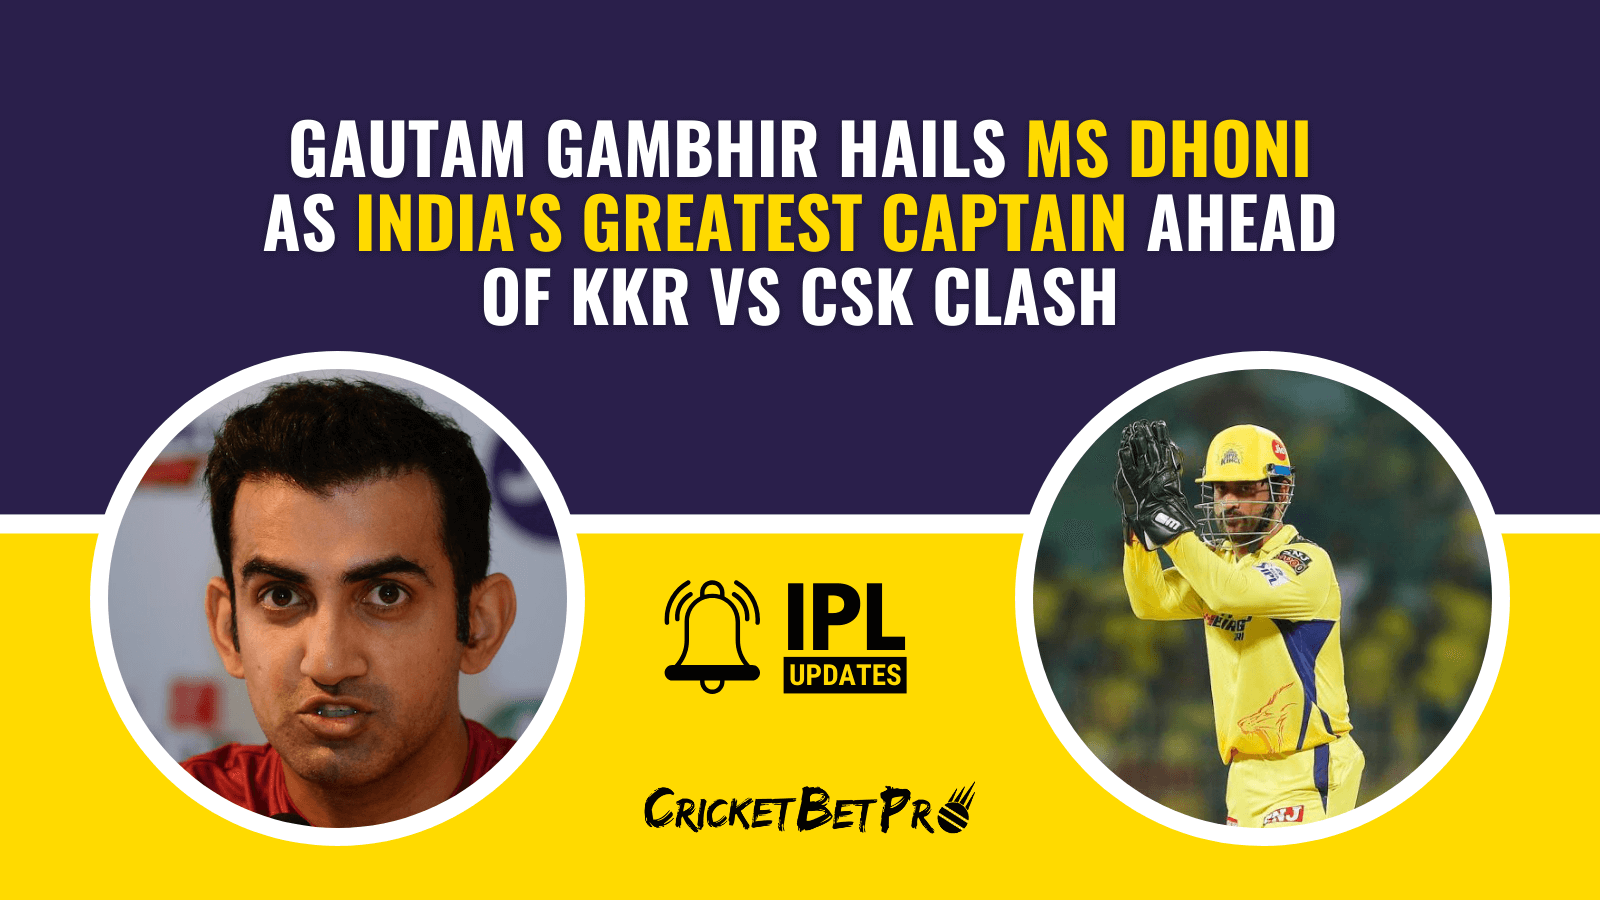 Gautam Gambhir Hails MS Dhoni as India's Greatest Captain ahead of KKR vs CSK Clash (1) (1)